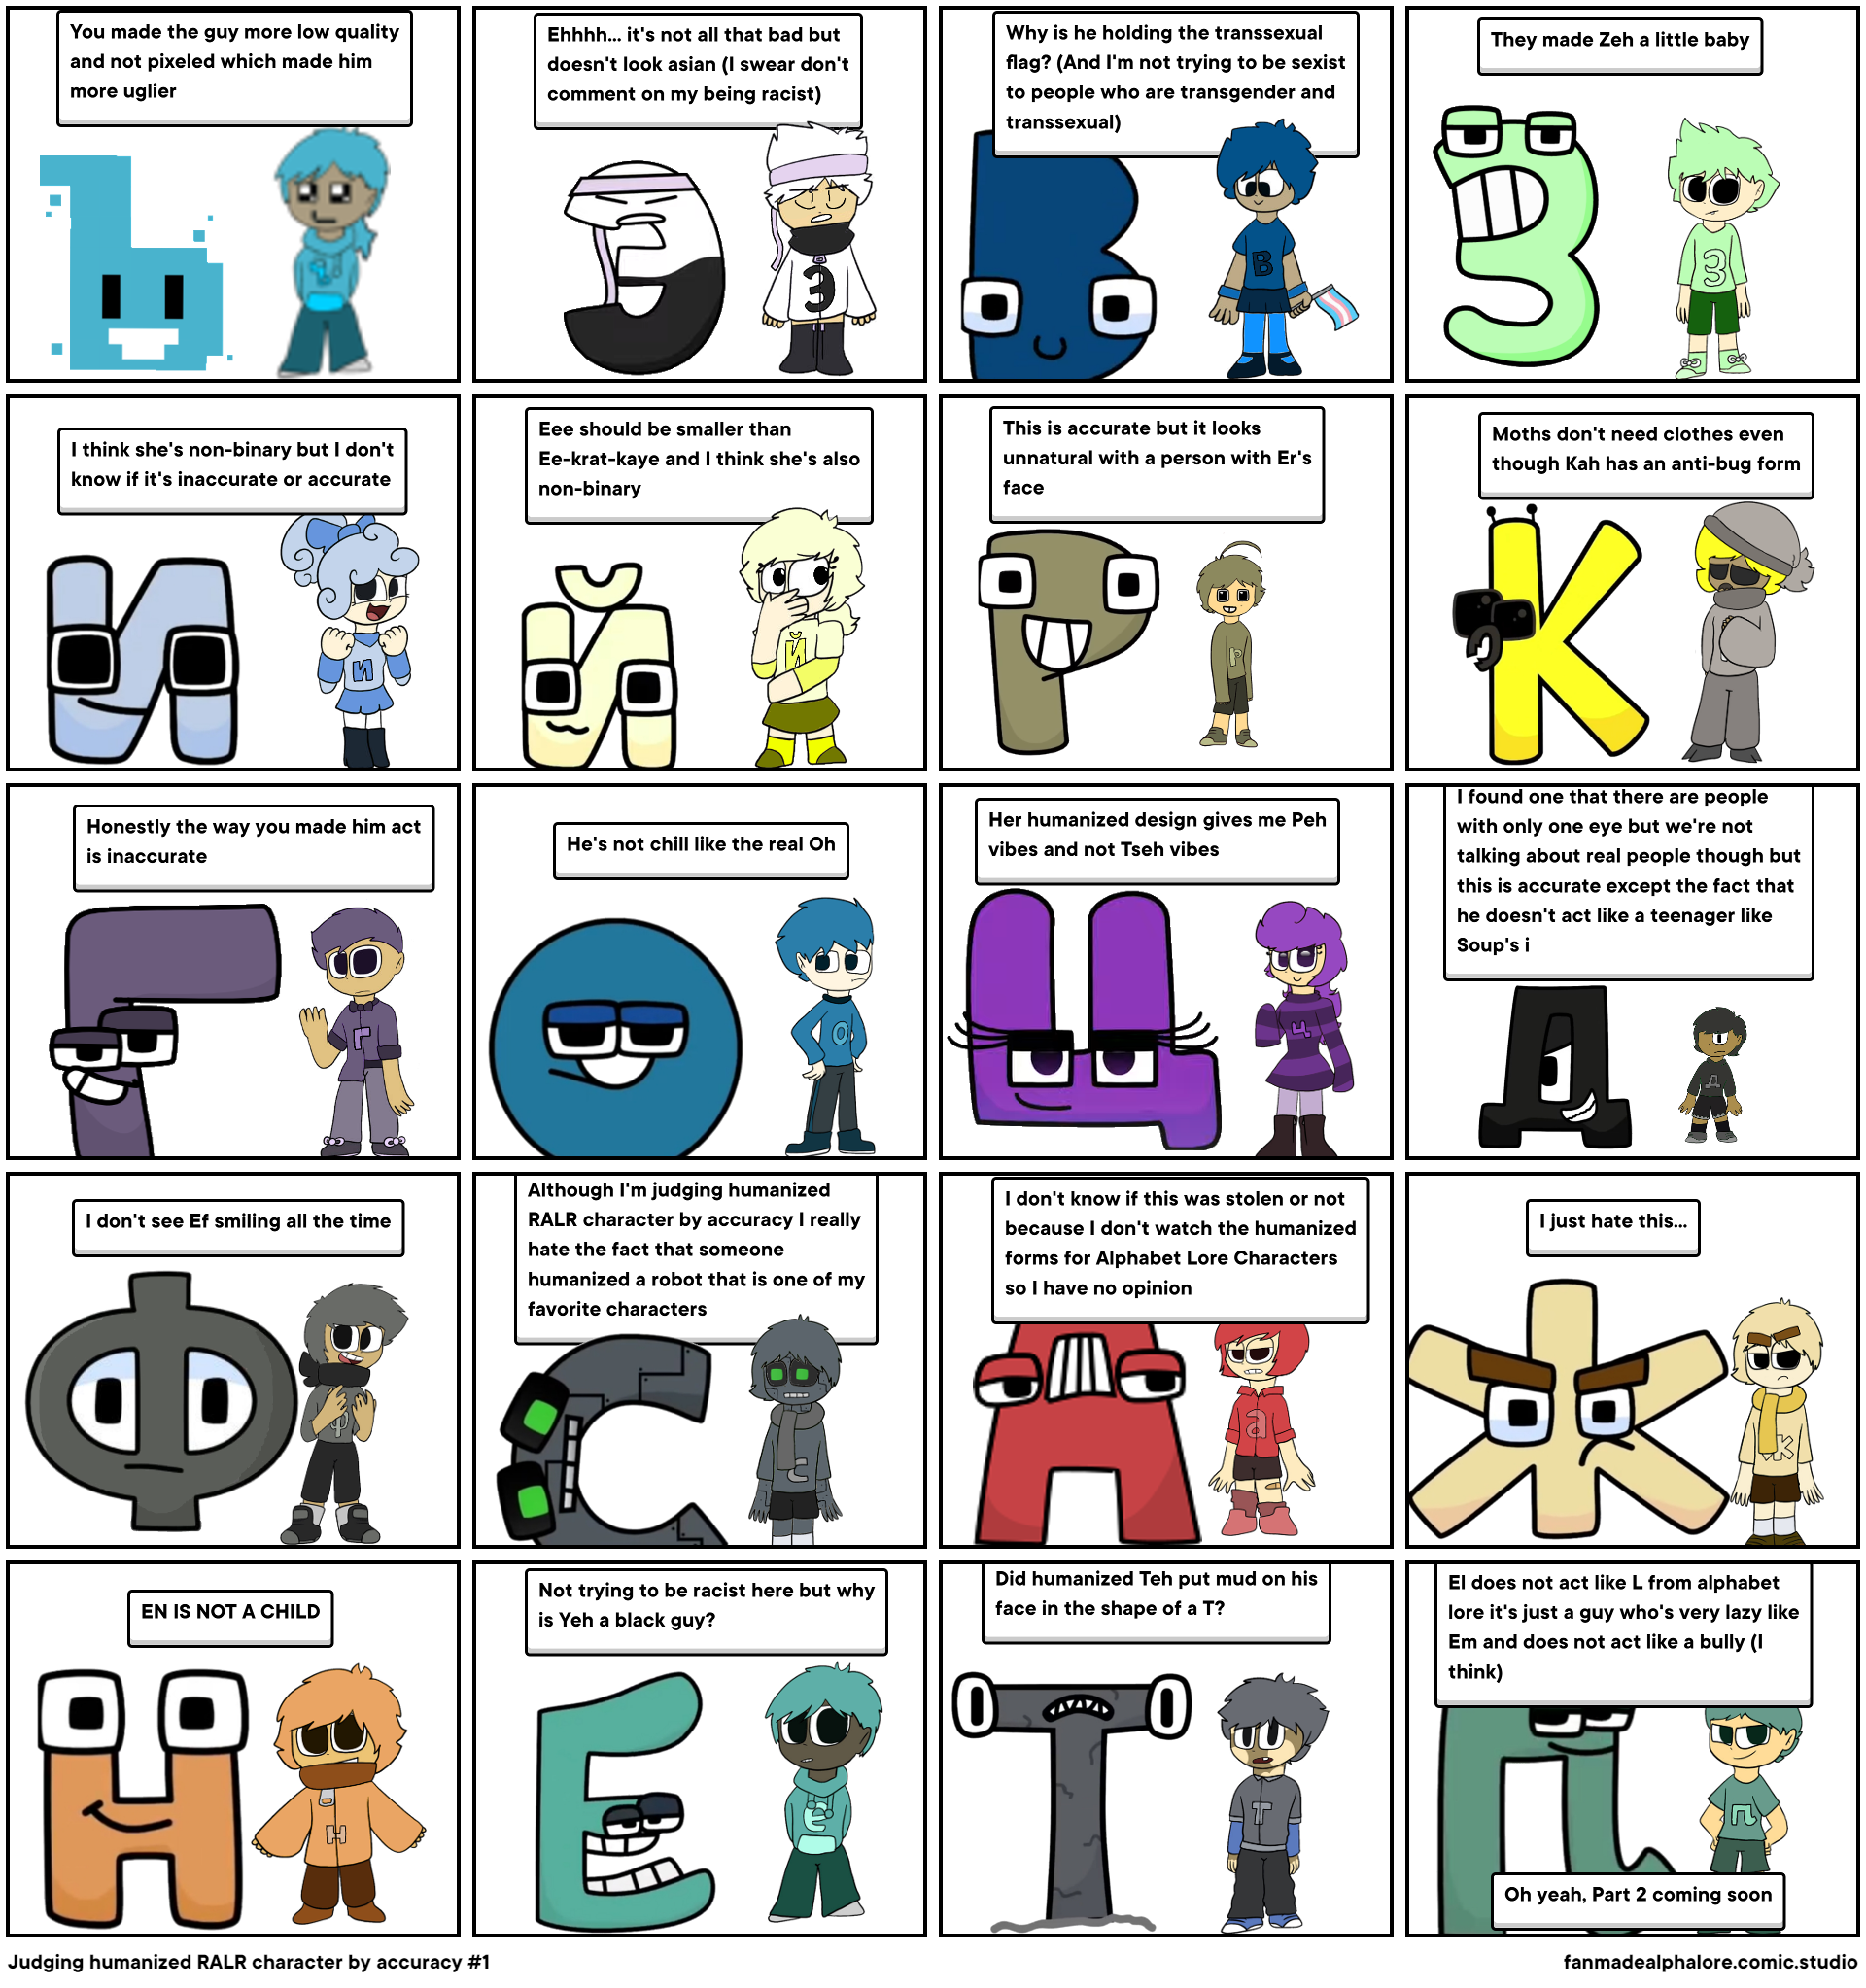 Humanized Alphabet Lore - Comic Studio